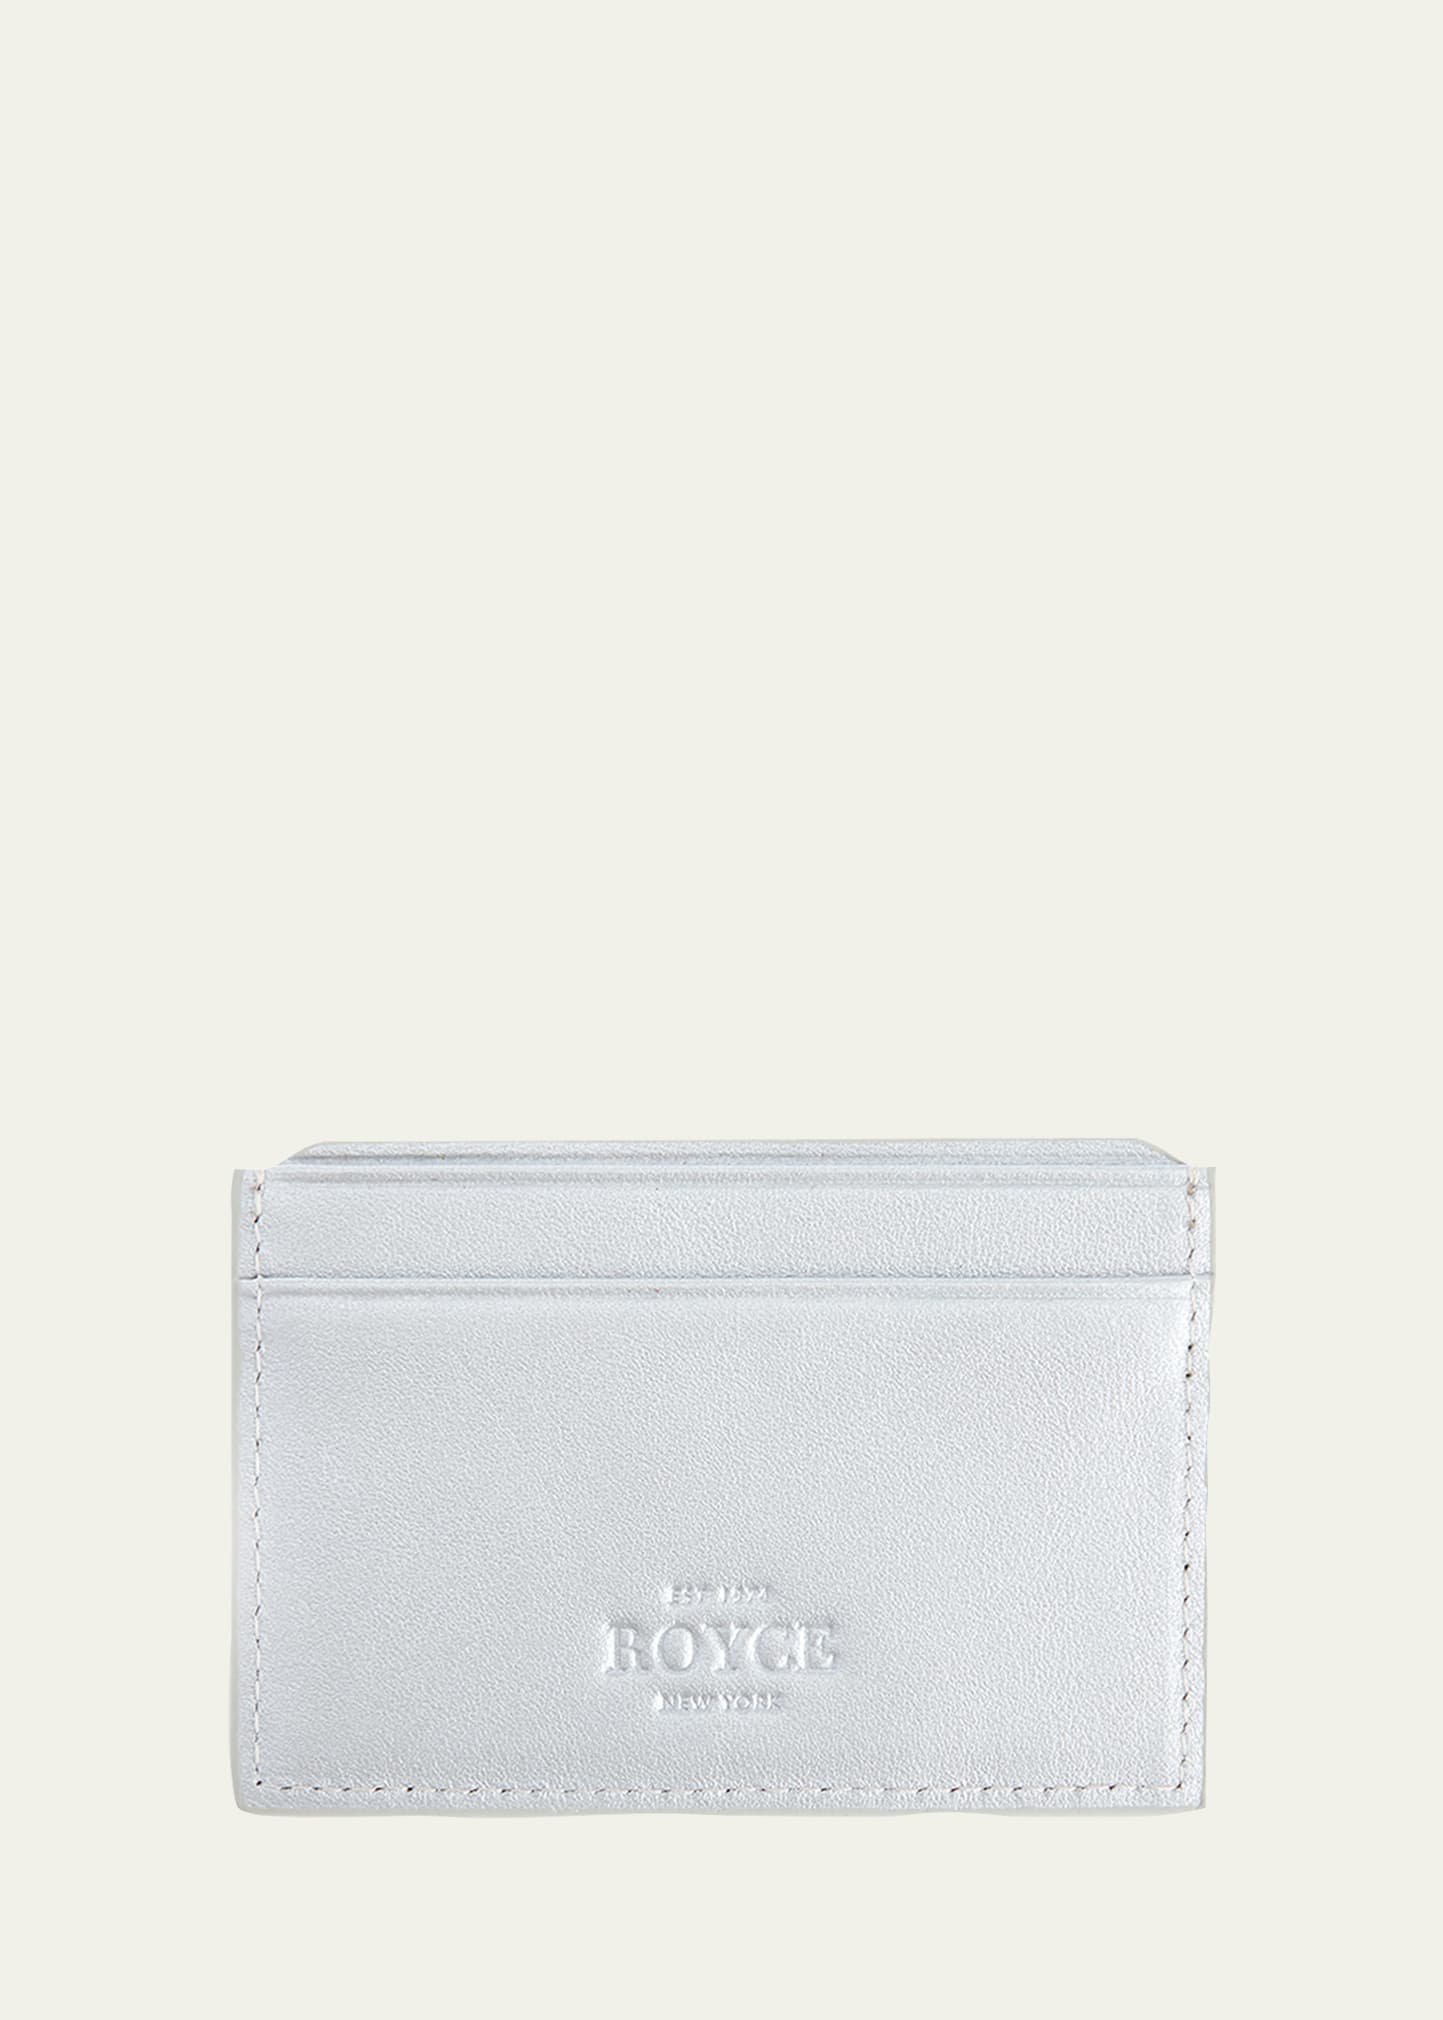 Shop Royce New York Rfid Blocking Credit Card Case In Silver